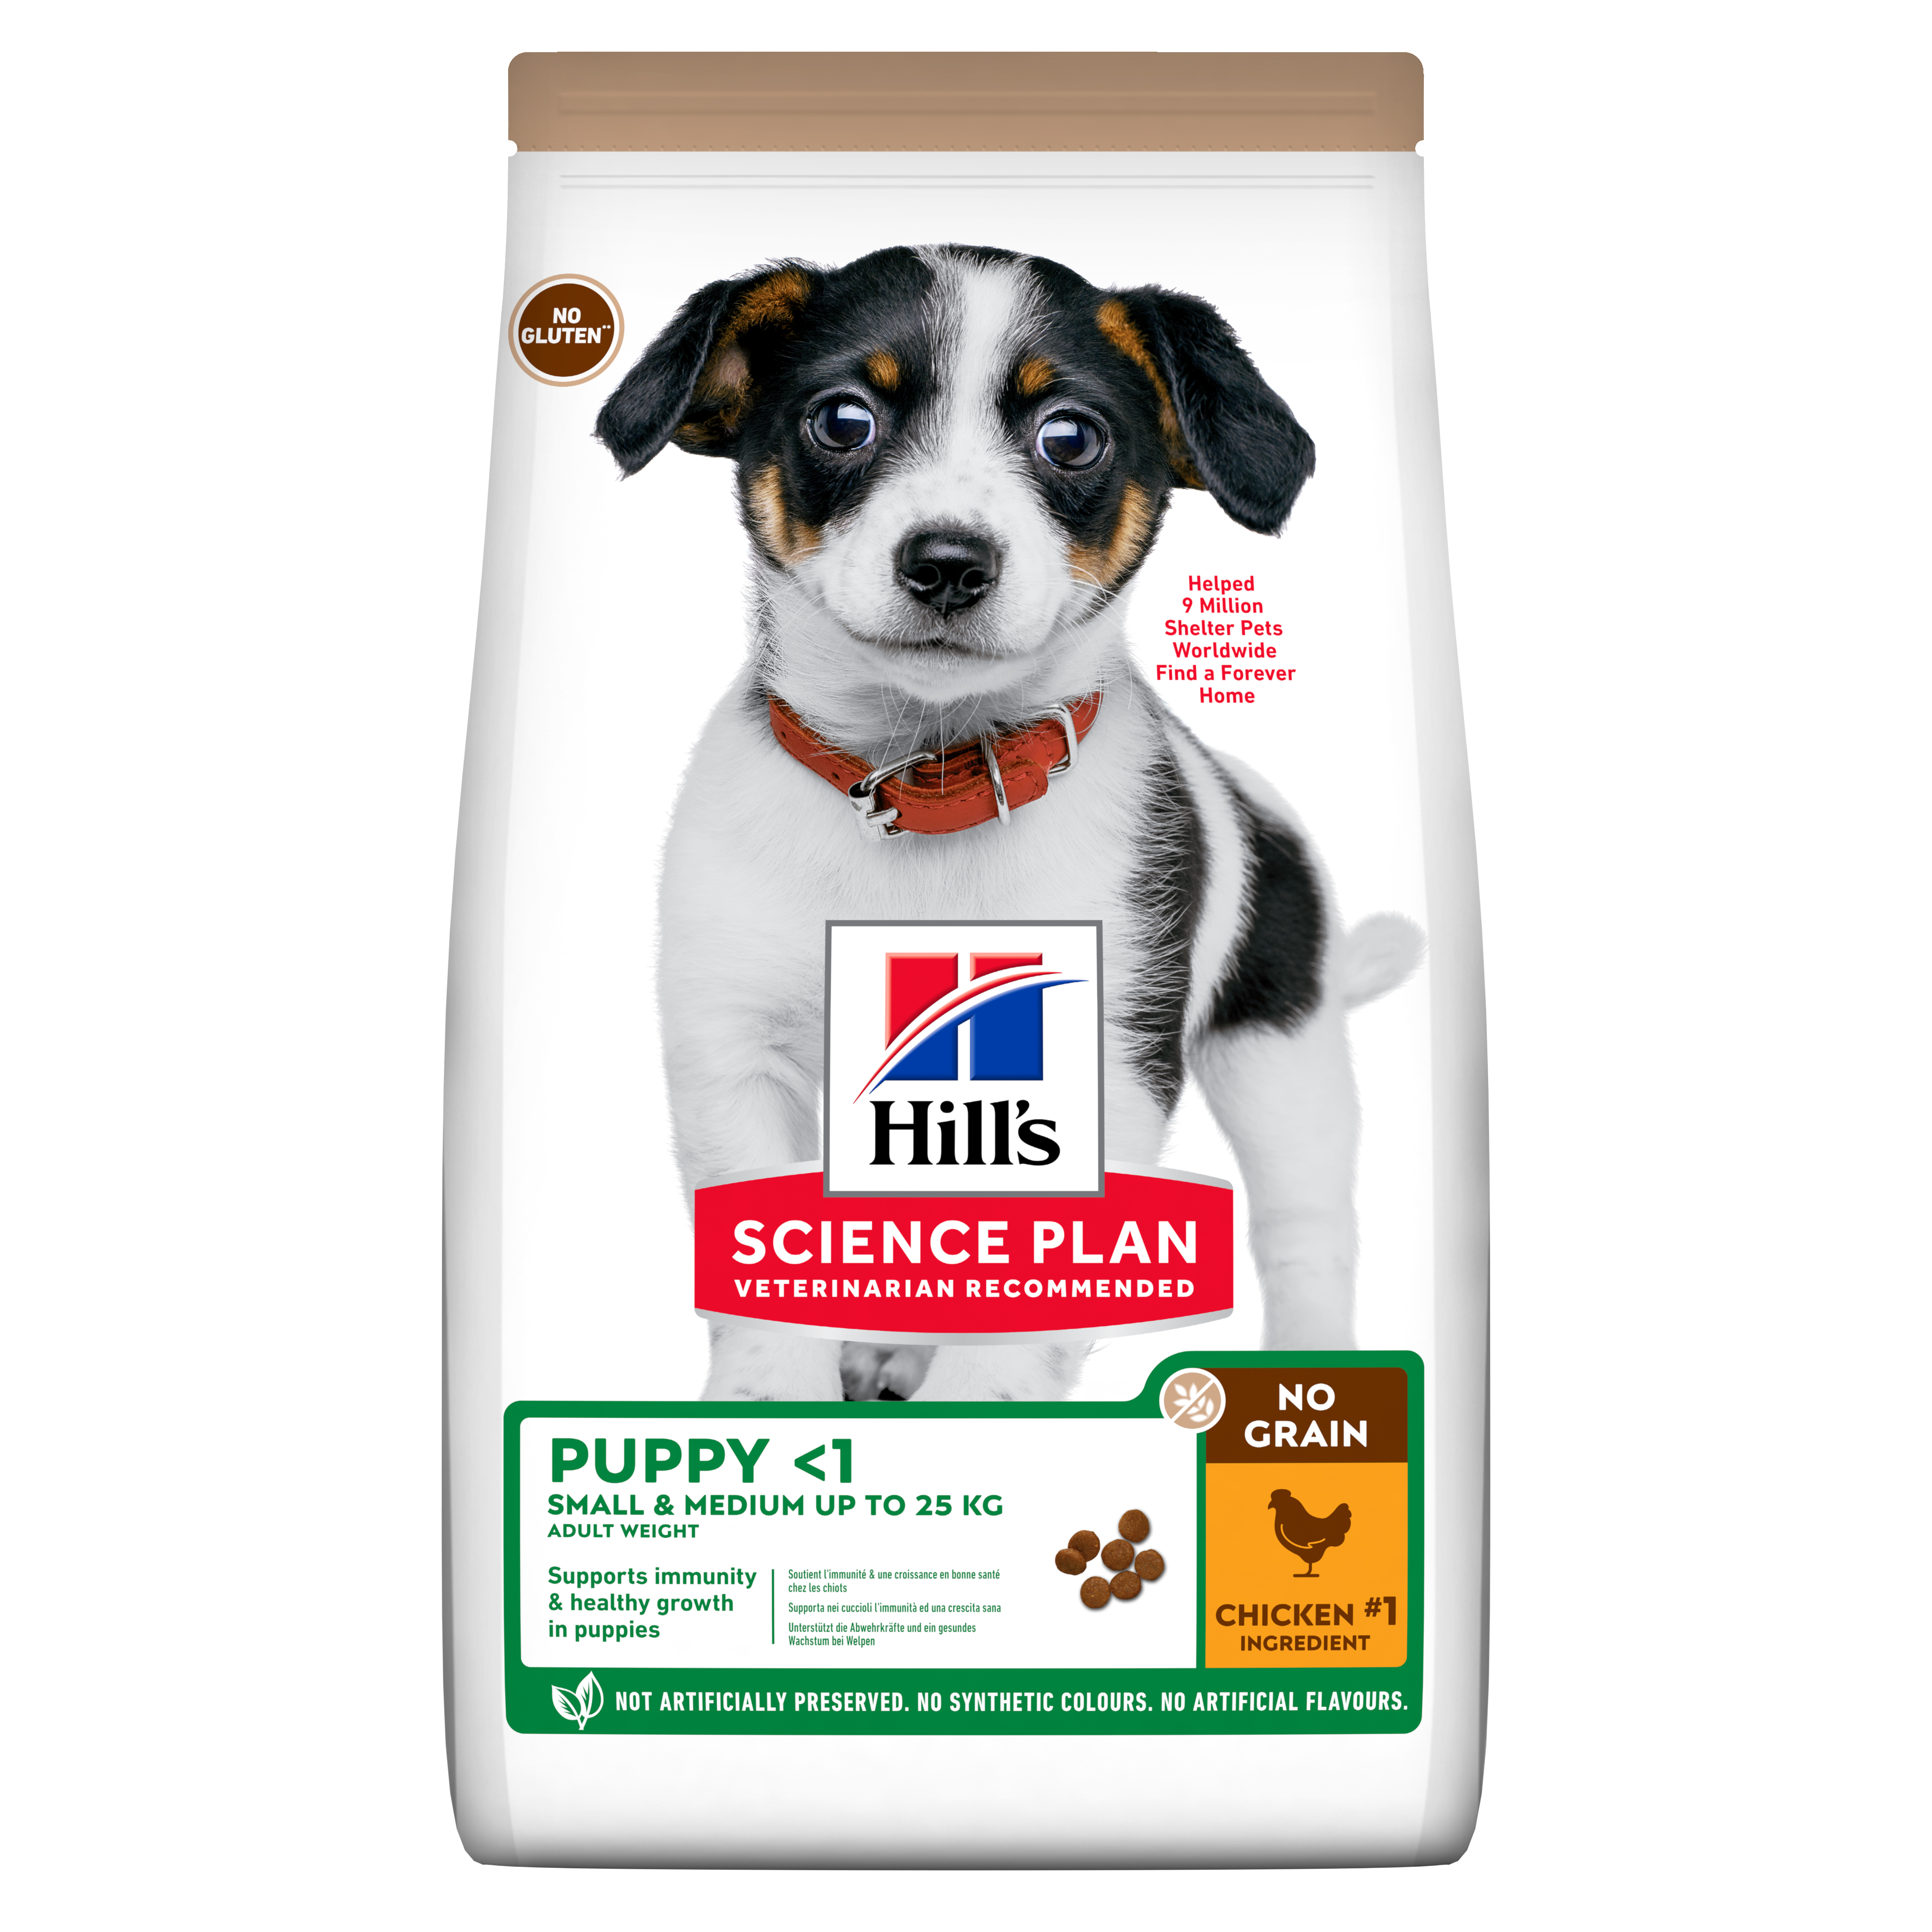 Hill's Science Plan Canine Puppy Small & Medium Chicken No Grain